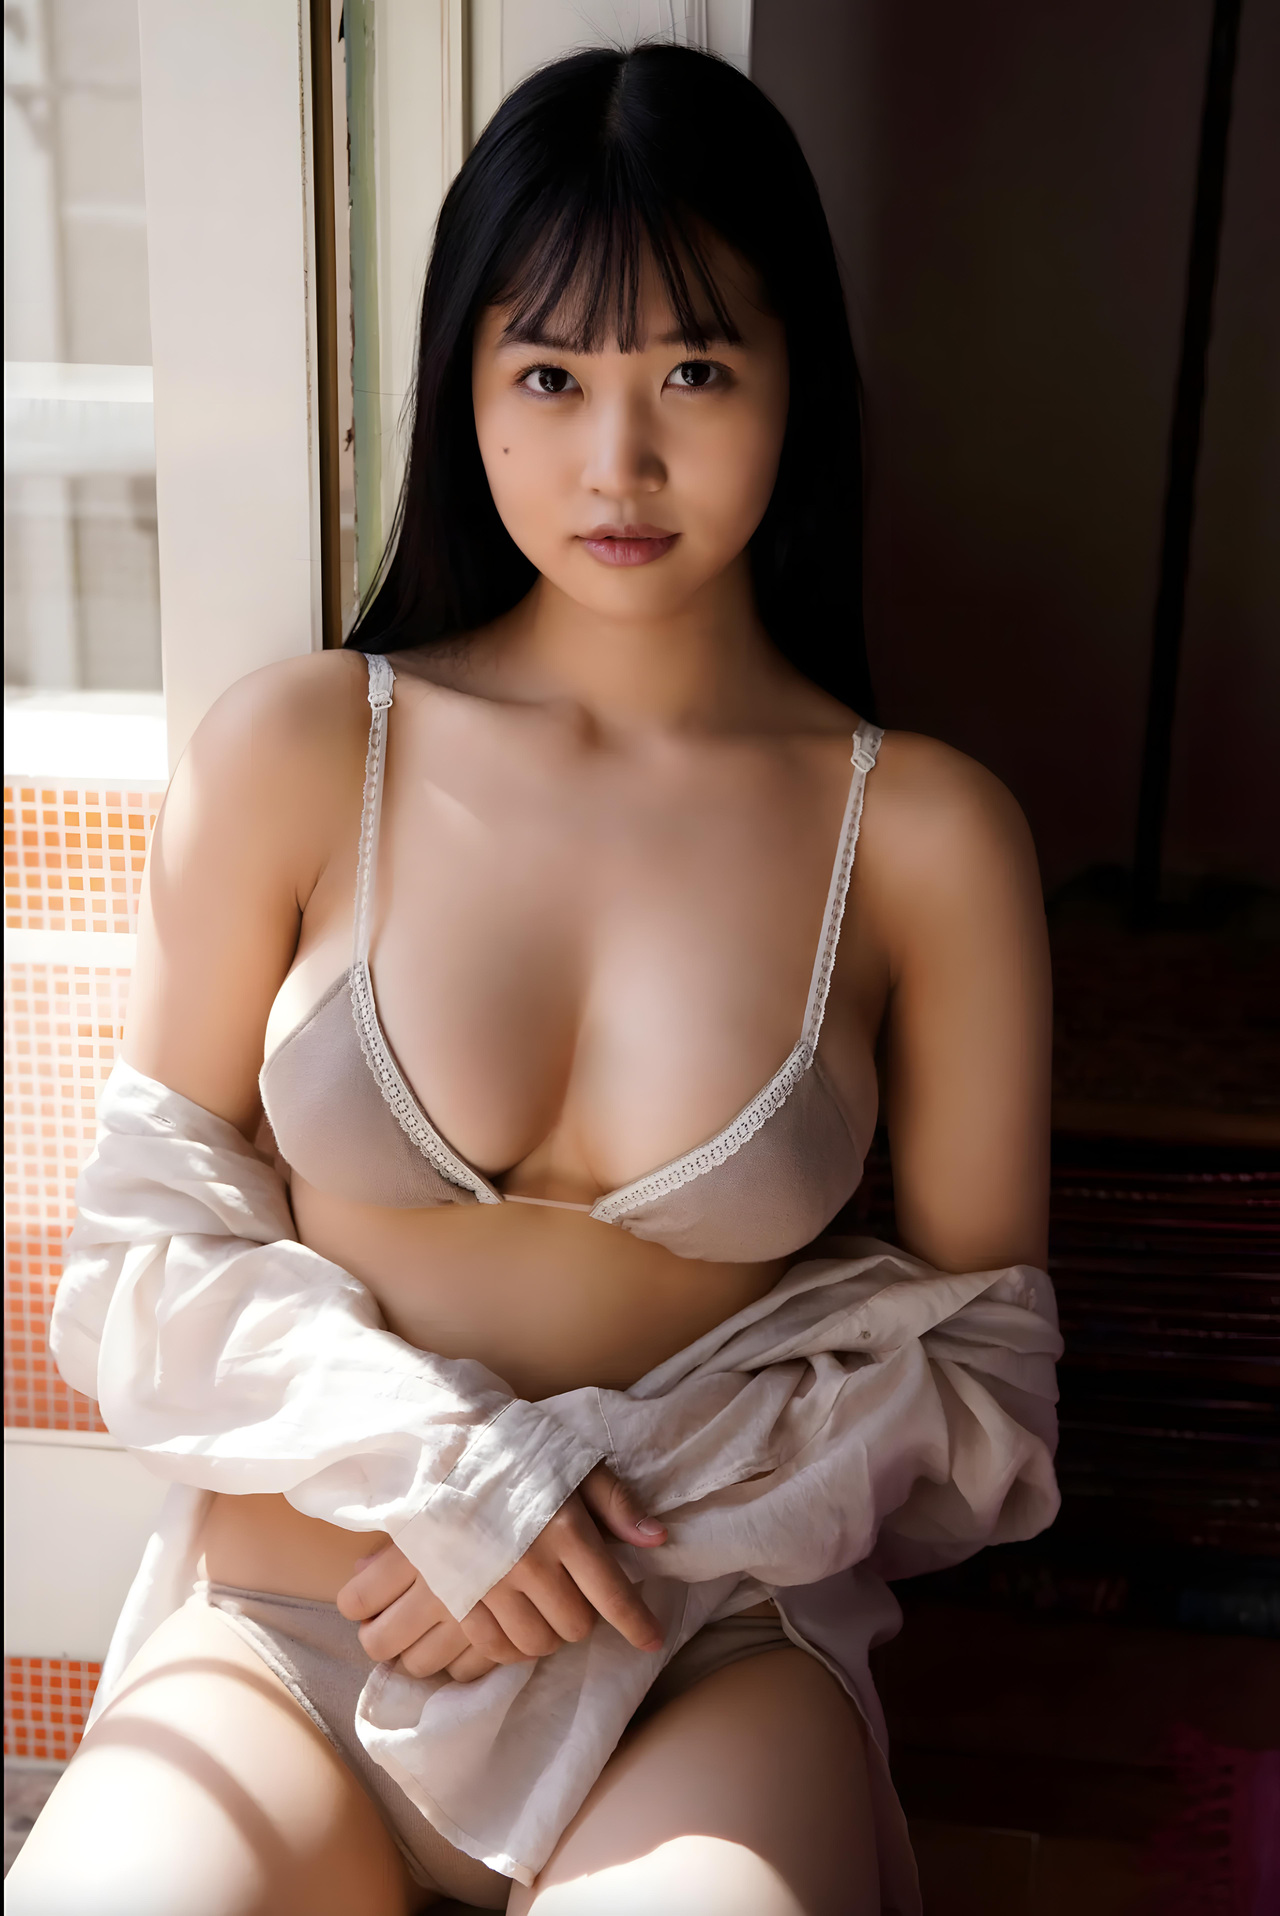 Miyuka Minami 南みゆか, FRIDAYデジタル写真集 「ビキニのシンデレラ」 Set.01